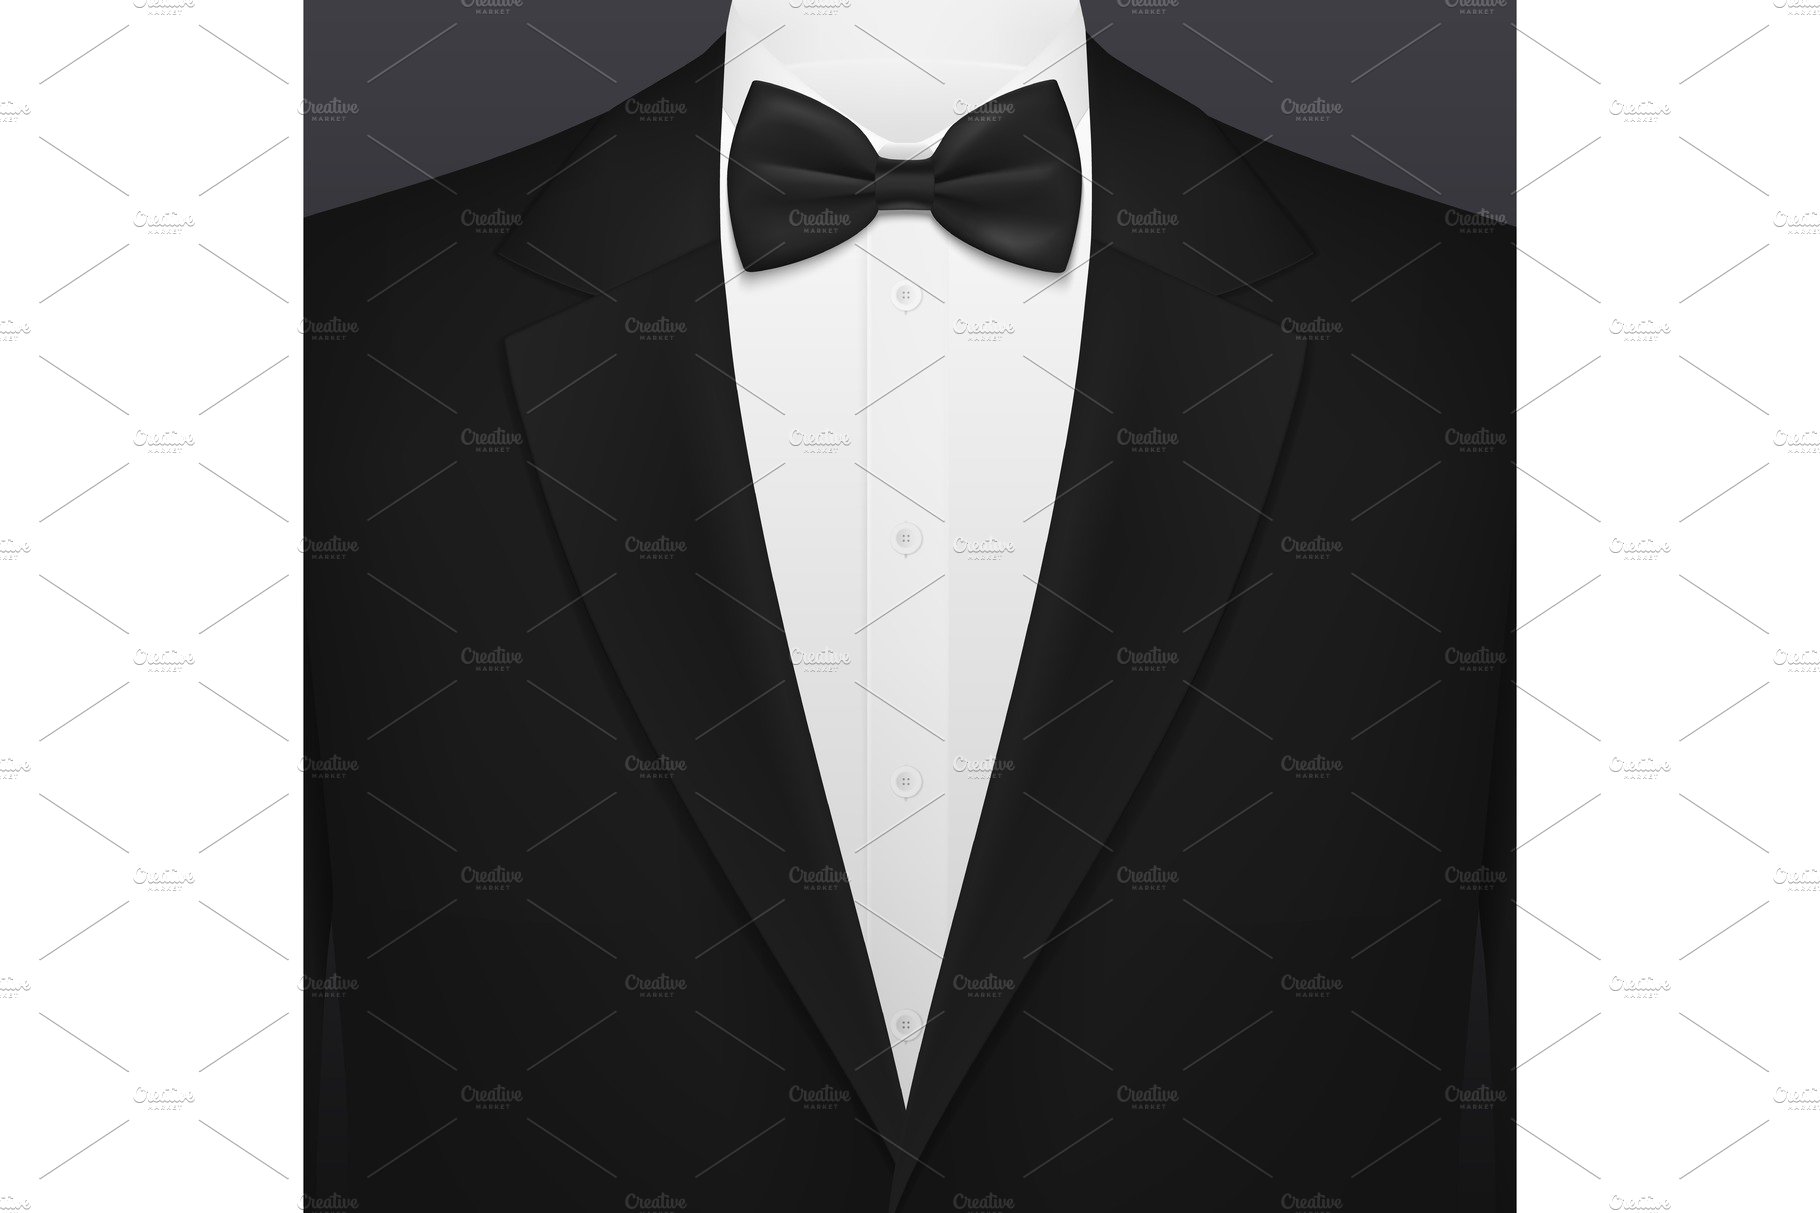 Black smoking suit, tuxedo cover image.